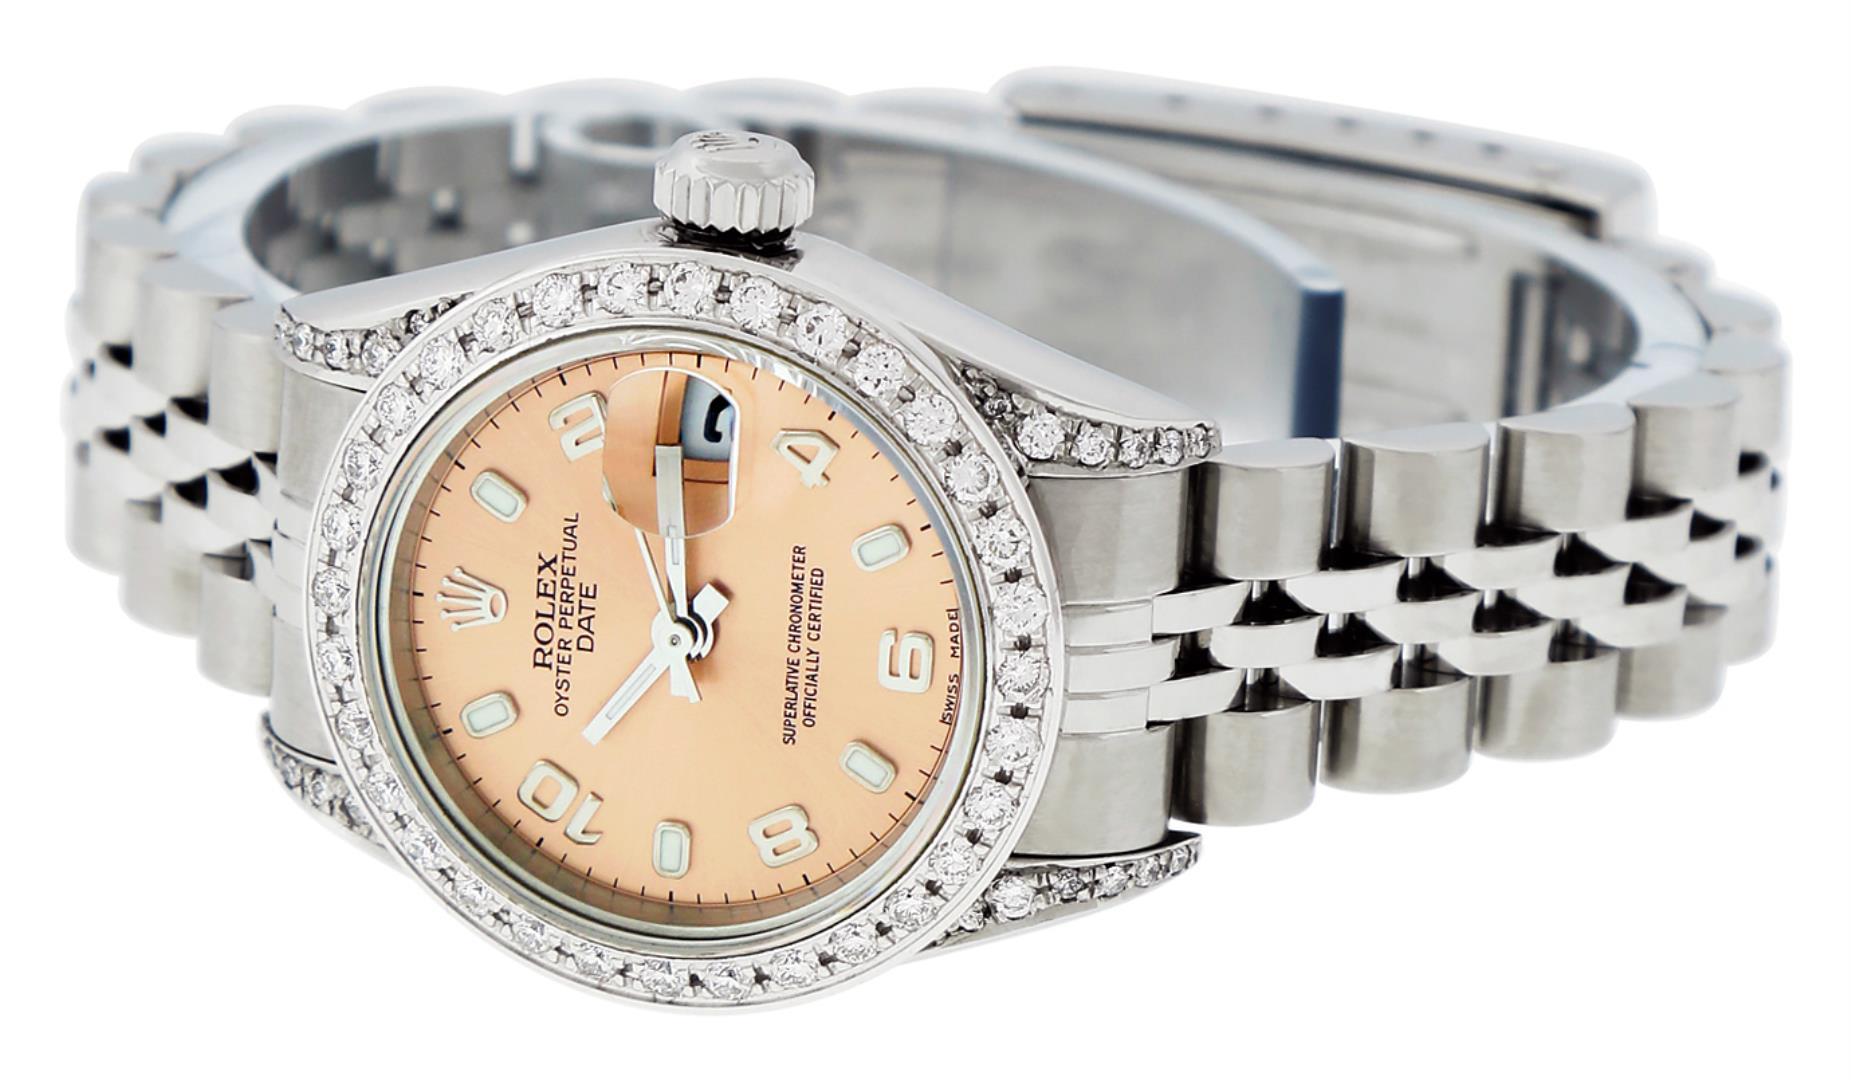 Rolex Ladies Stainless Steel Salmon Diamond Date Wristwatch